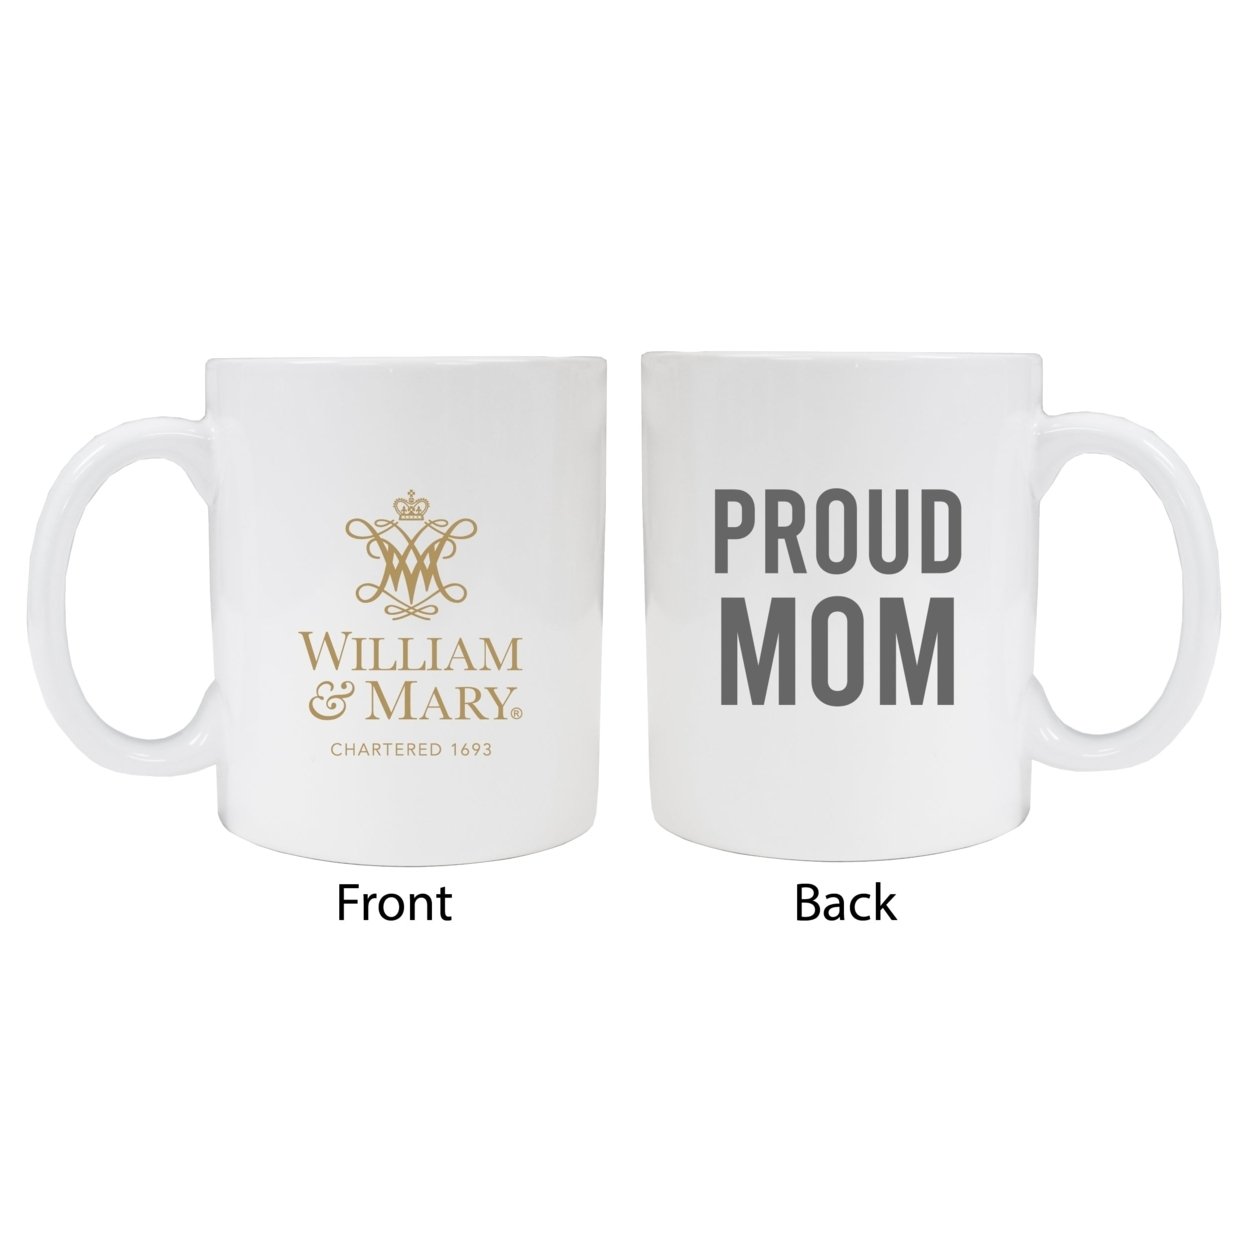 William And Mary Proud Mom Ceramic Coffee Mug - White (2 Pack)